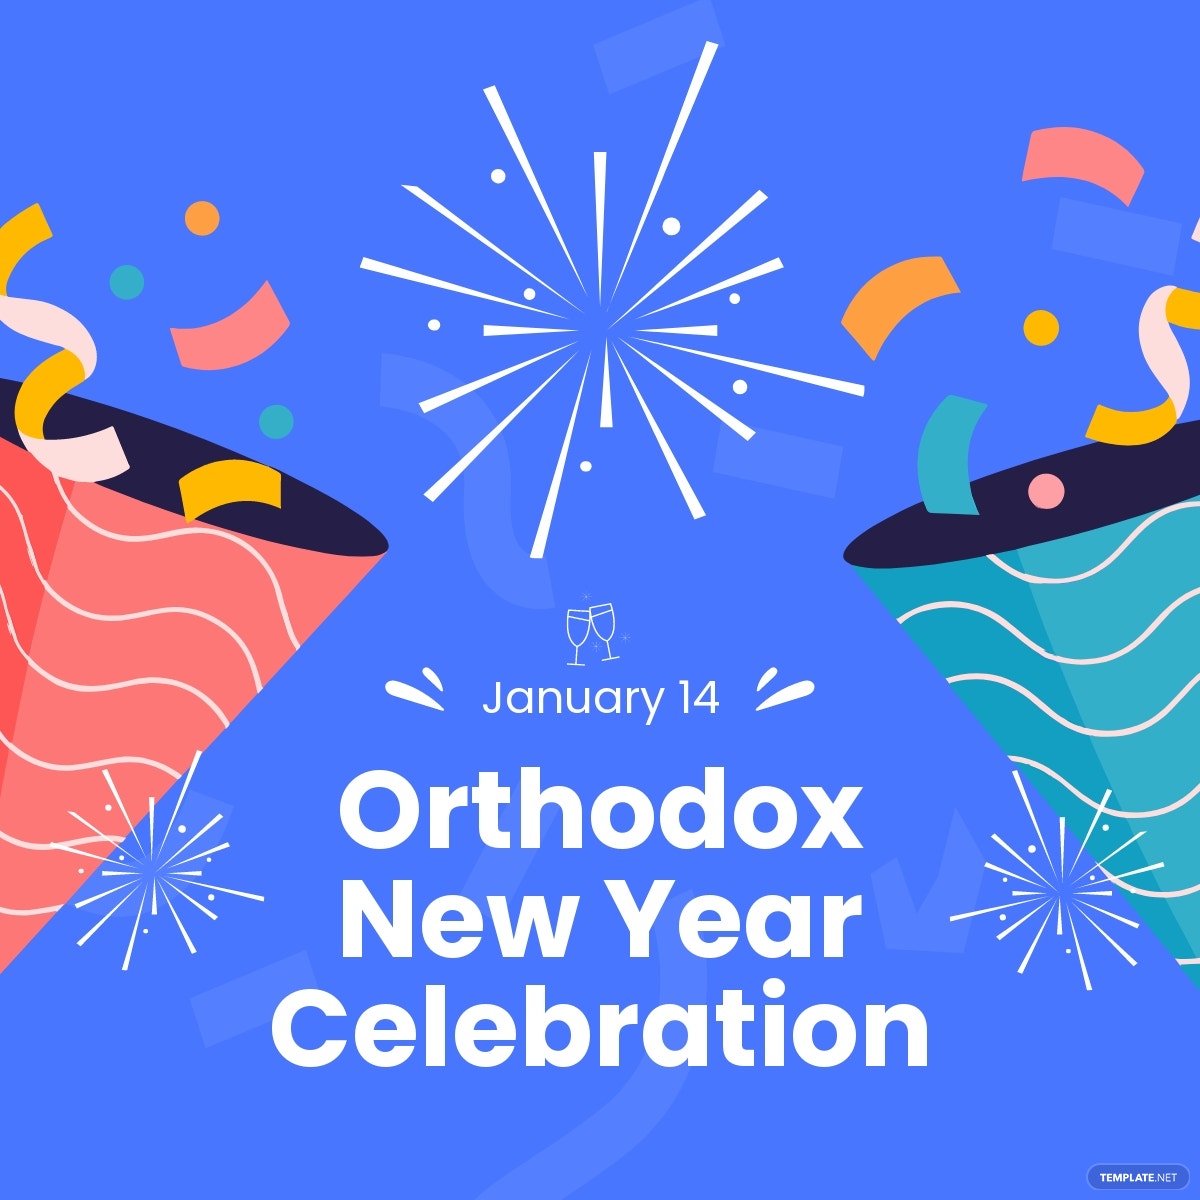 orthodox-new-year-celebration-linkedin-post-template